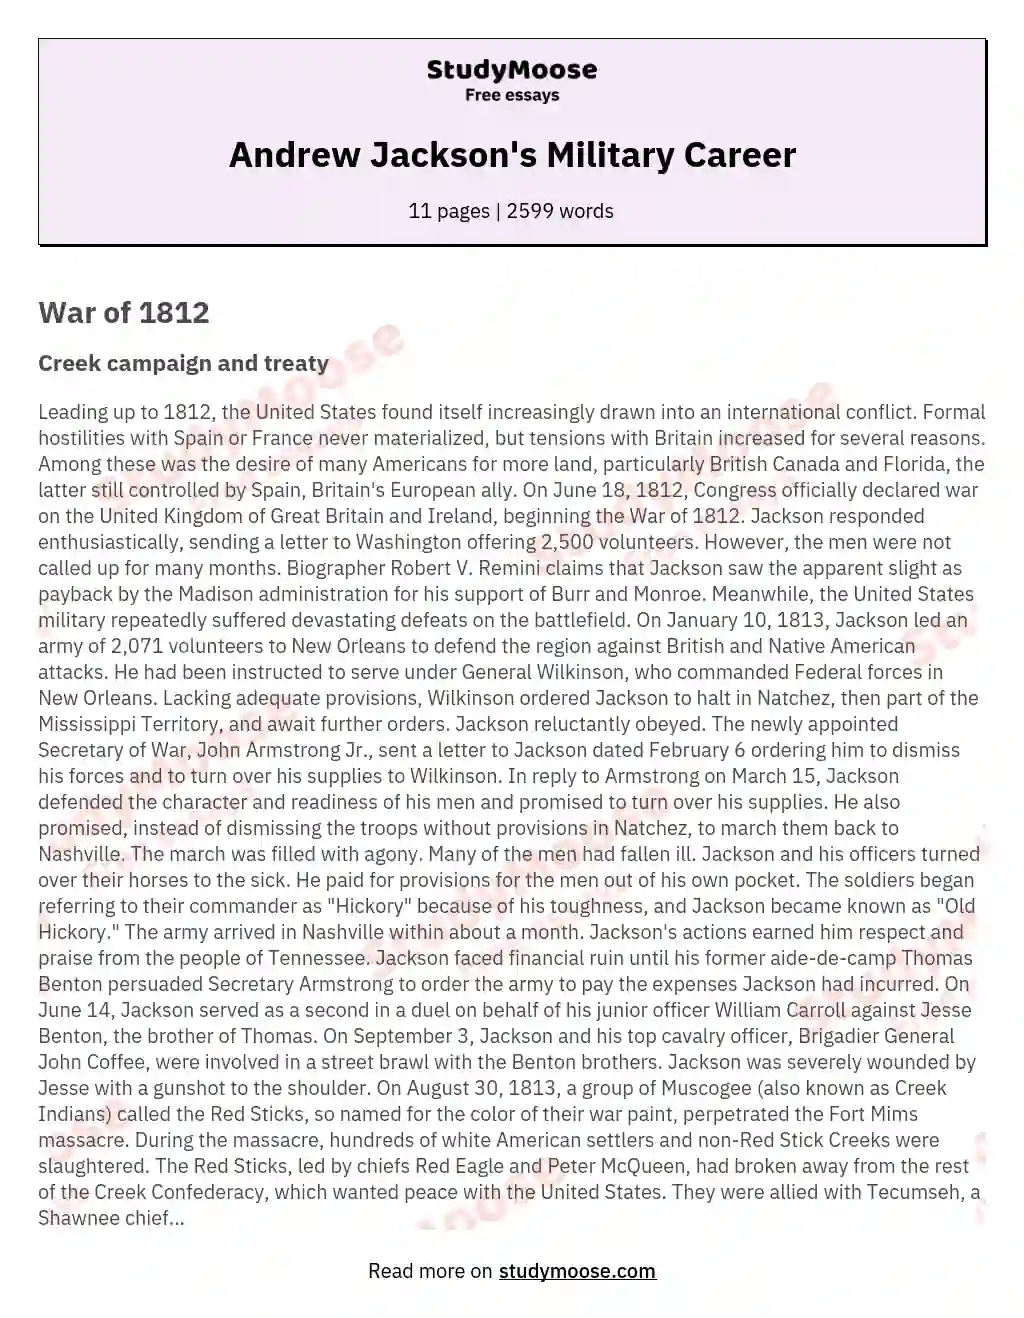 Andrew Jackson's Military Career essay